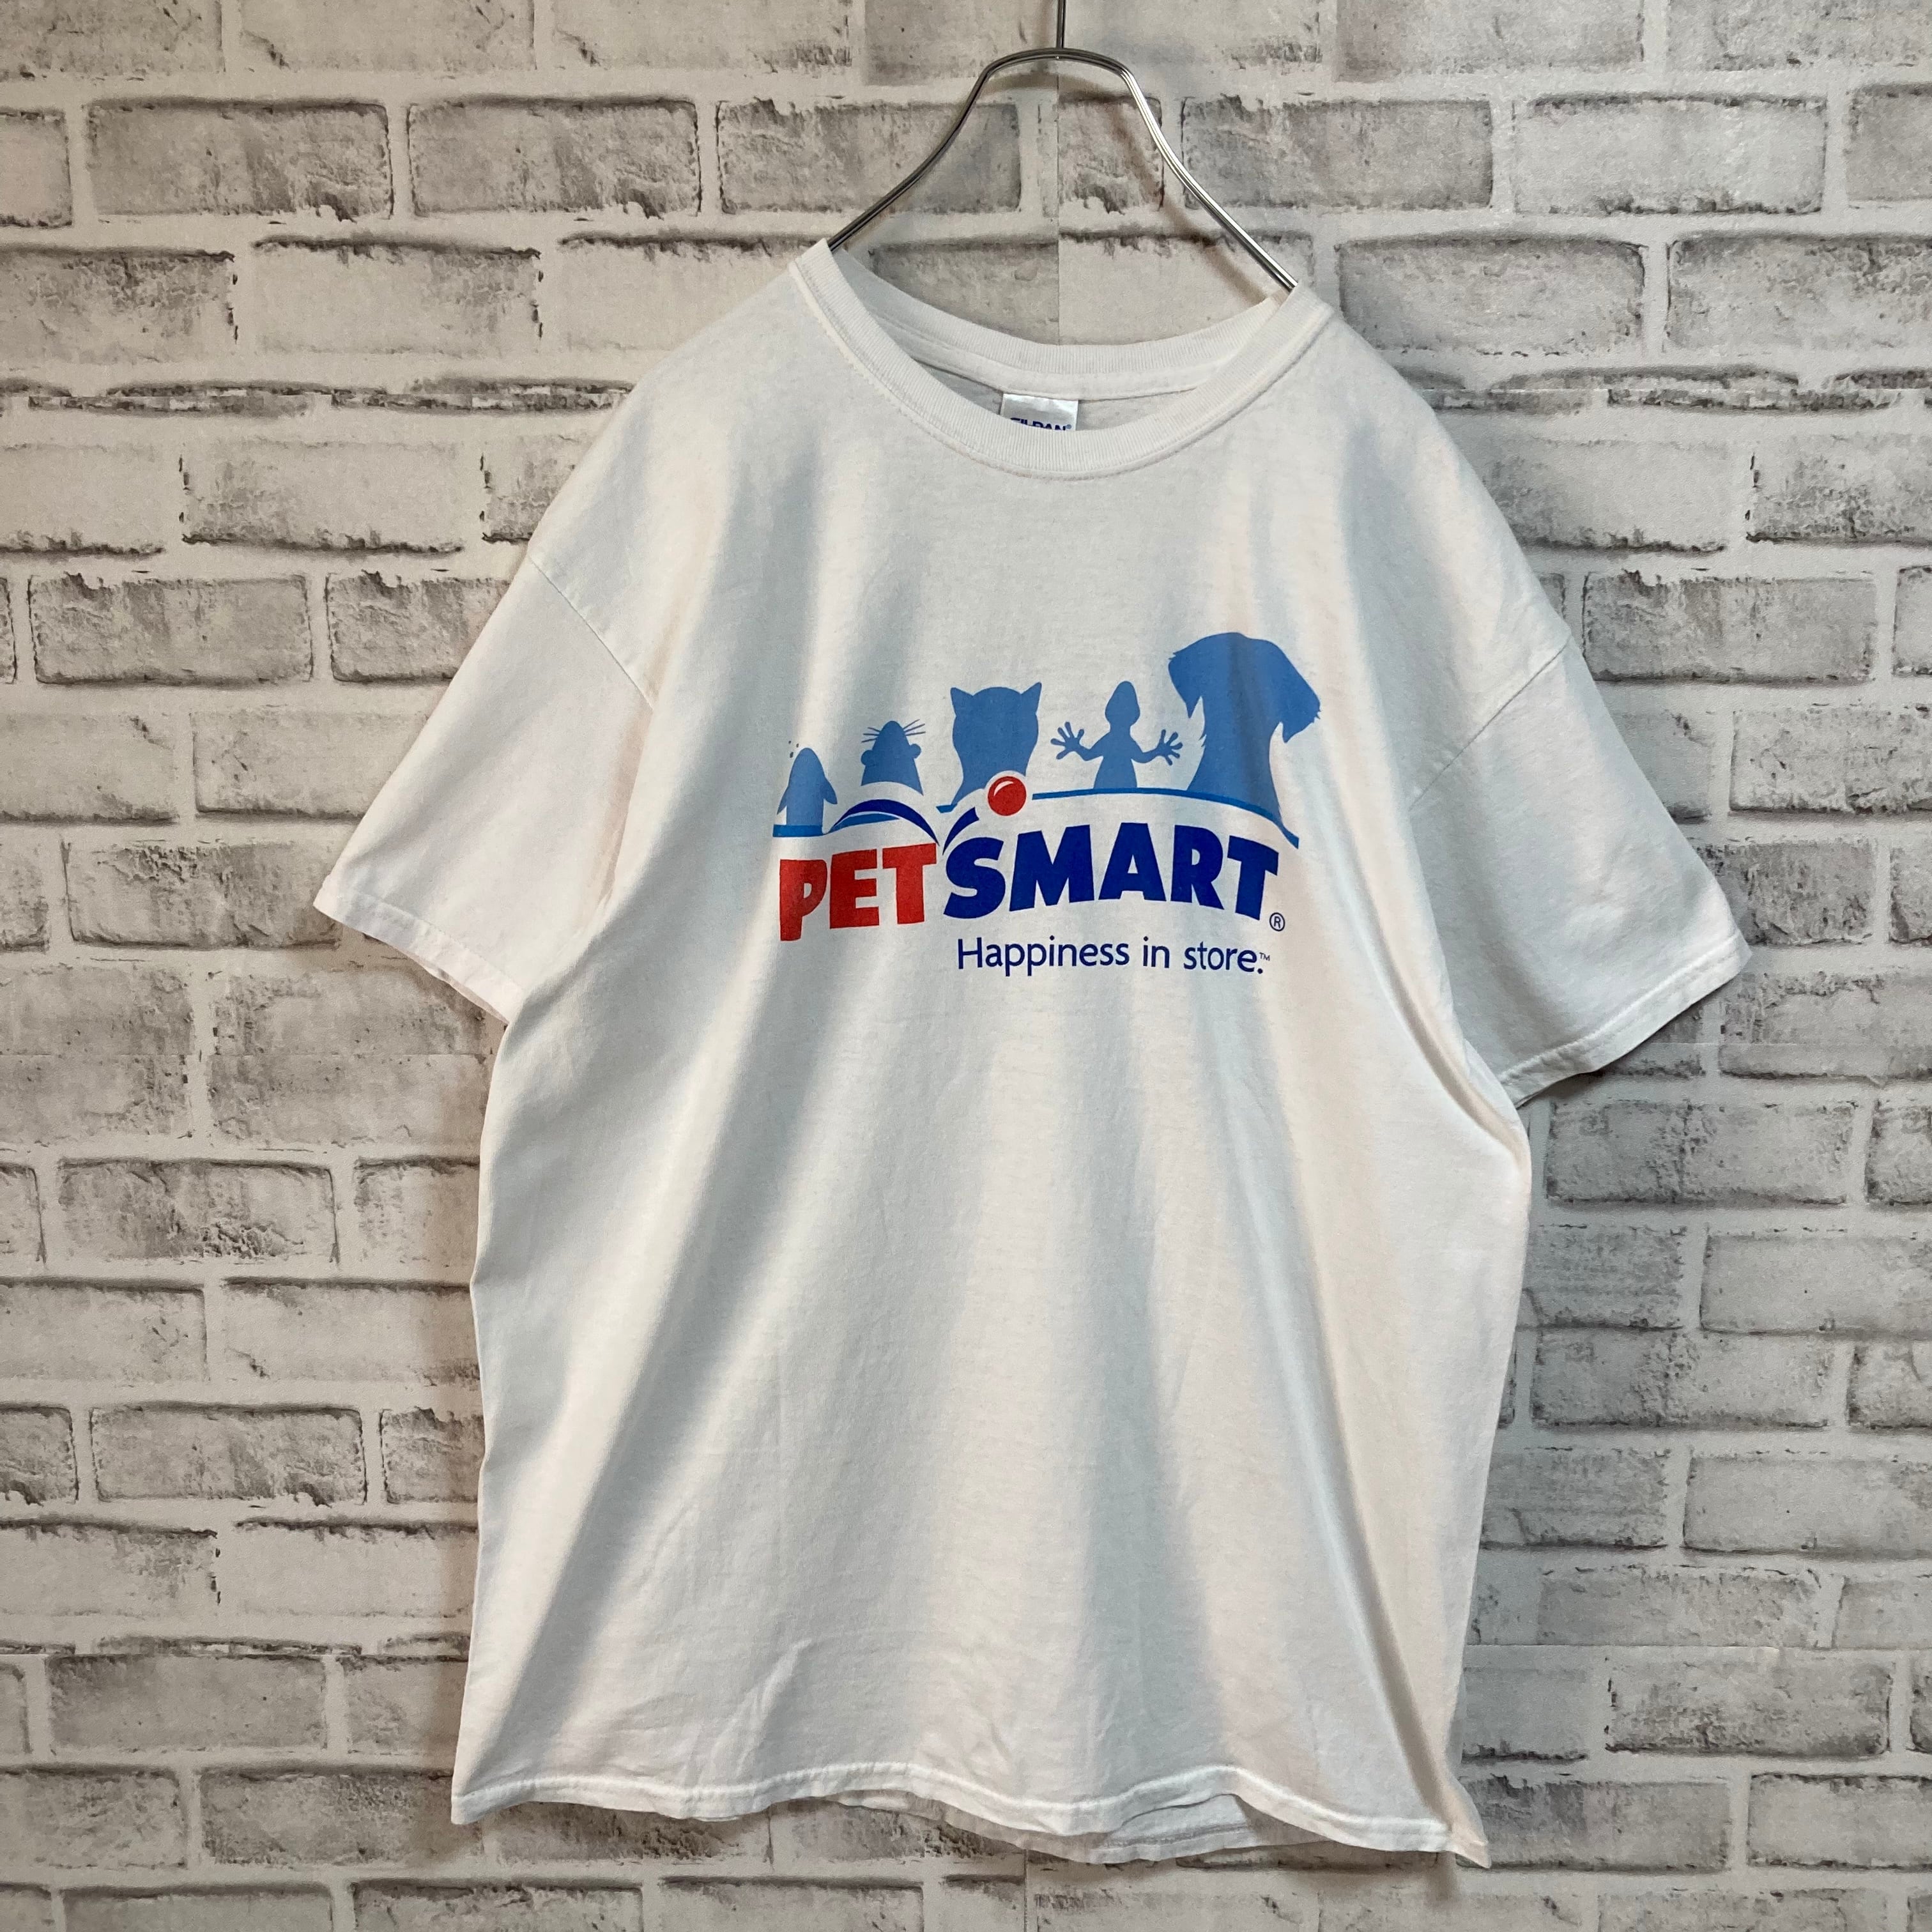 GILDAN】S/S Tee L “PET SMART” バックプリント 両面プリント Tシャツ